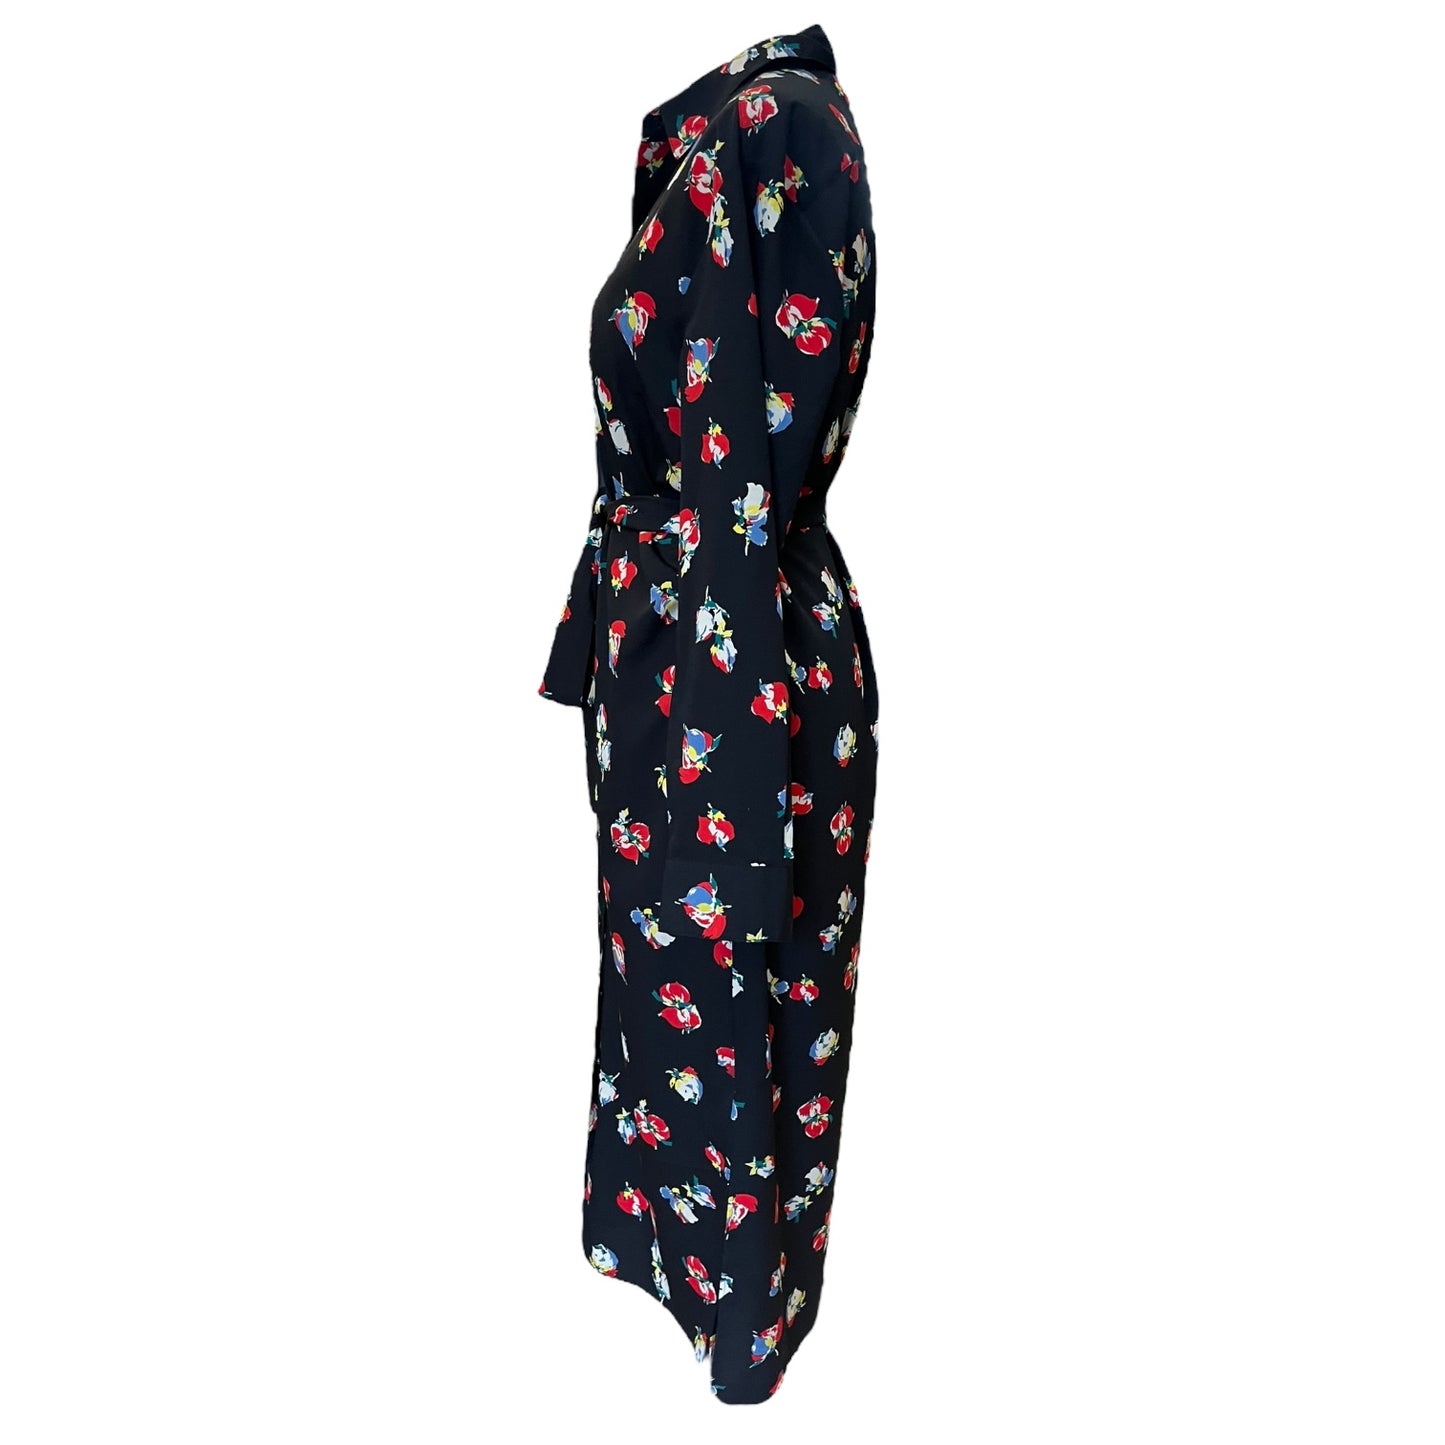 Ralph Lauren Black Floral Dress